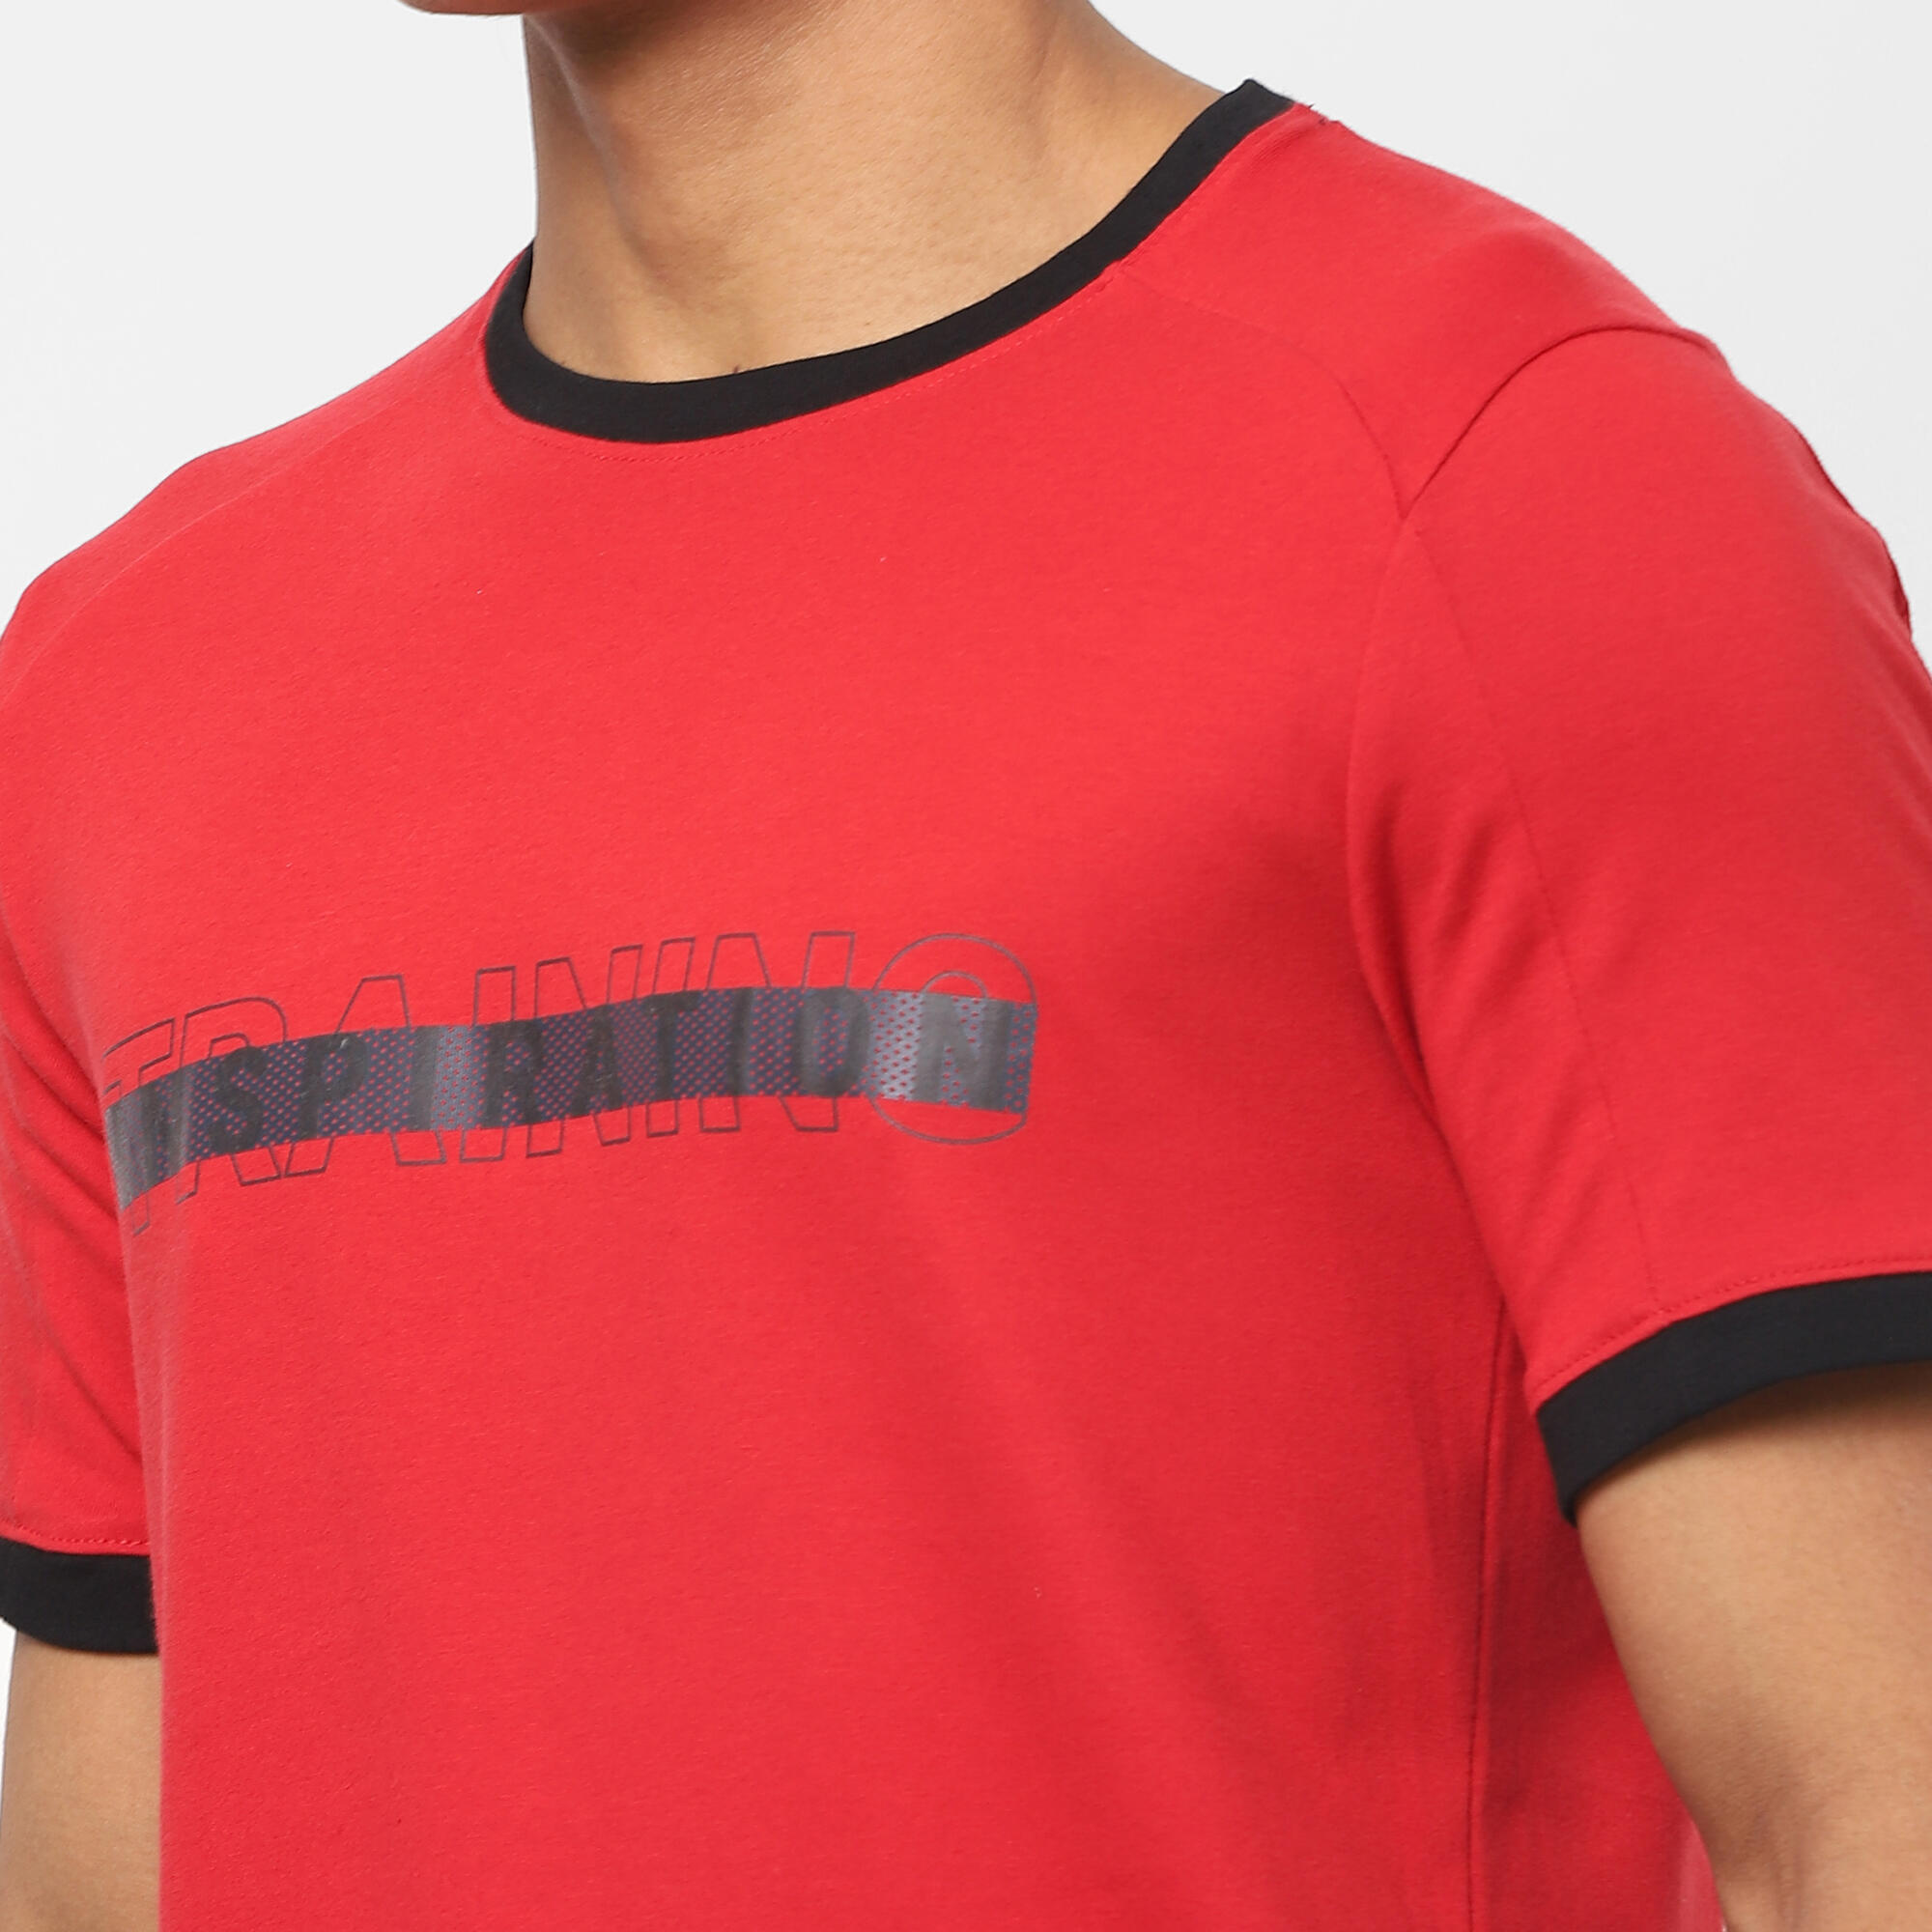 Men's Short-Sleeved Fitted-Cut Crew Neck Cotton Fitness T-Shirt 520 - Garnet Red 1/7